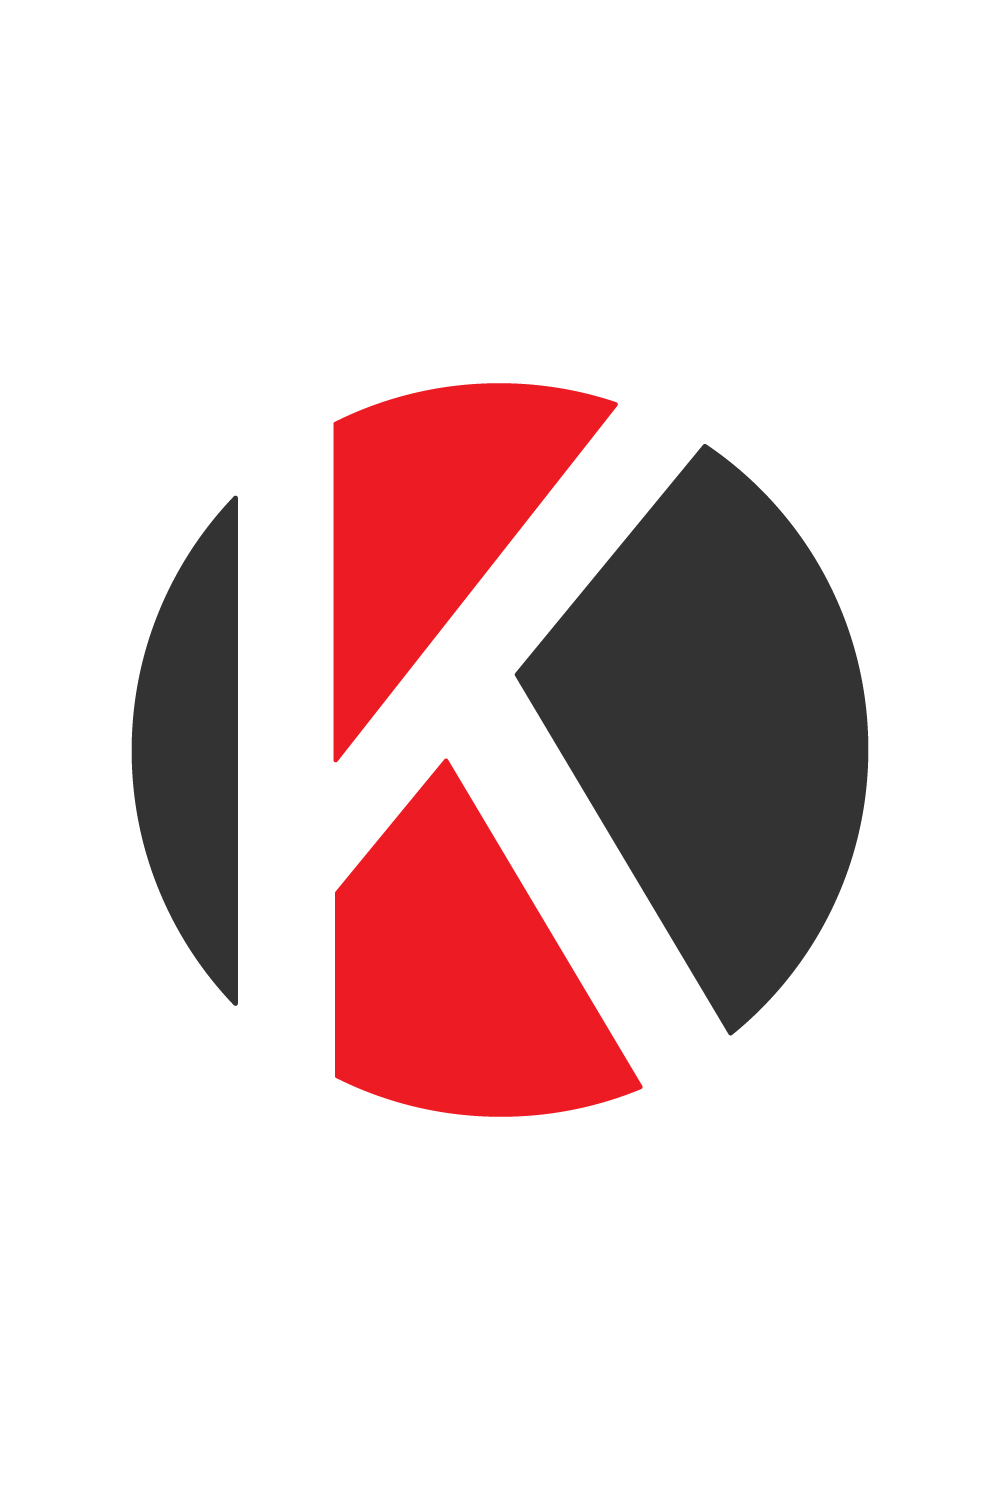 Initials K letters logo design vector images OK logo design best branding logo K background logo design best company identity pinterest preview image.